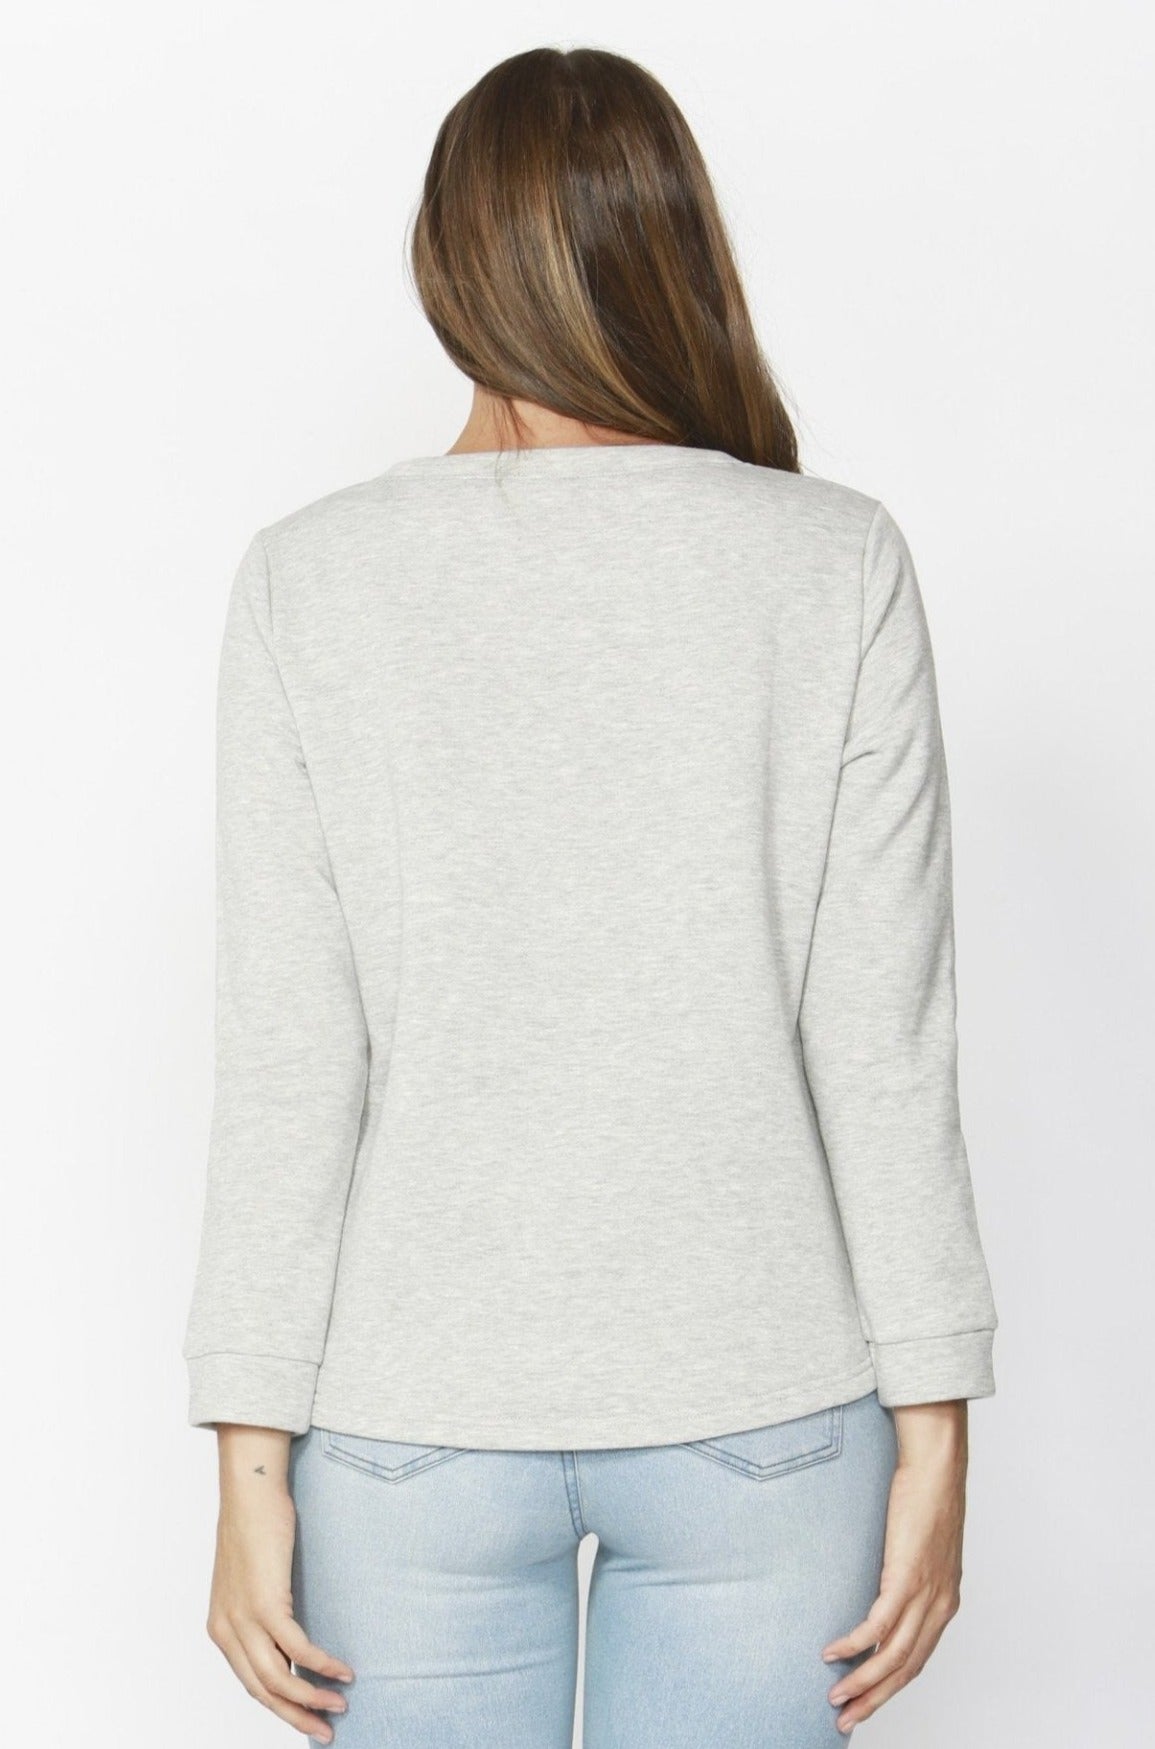 Sass Date Night Sweater in Grey Marle - Hey Sara